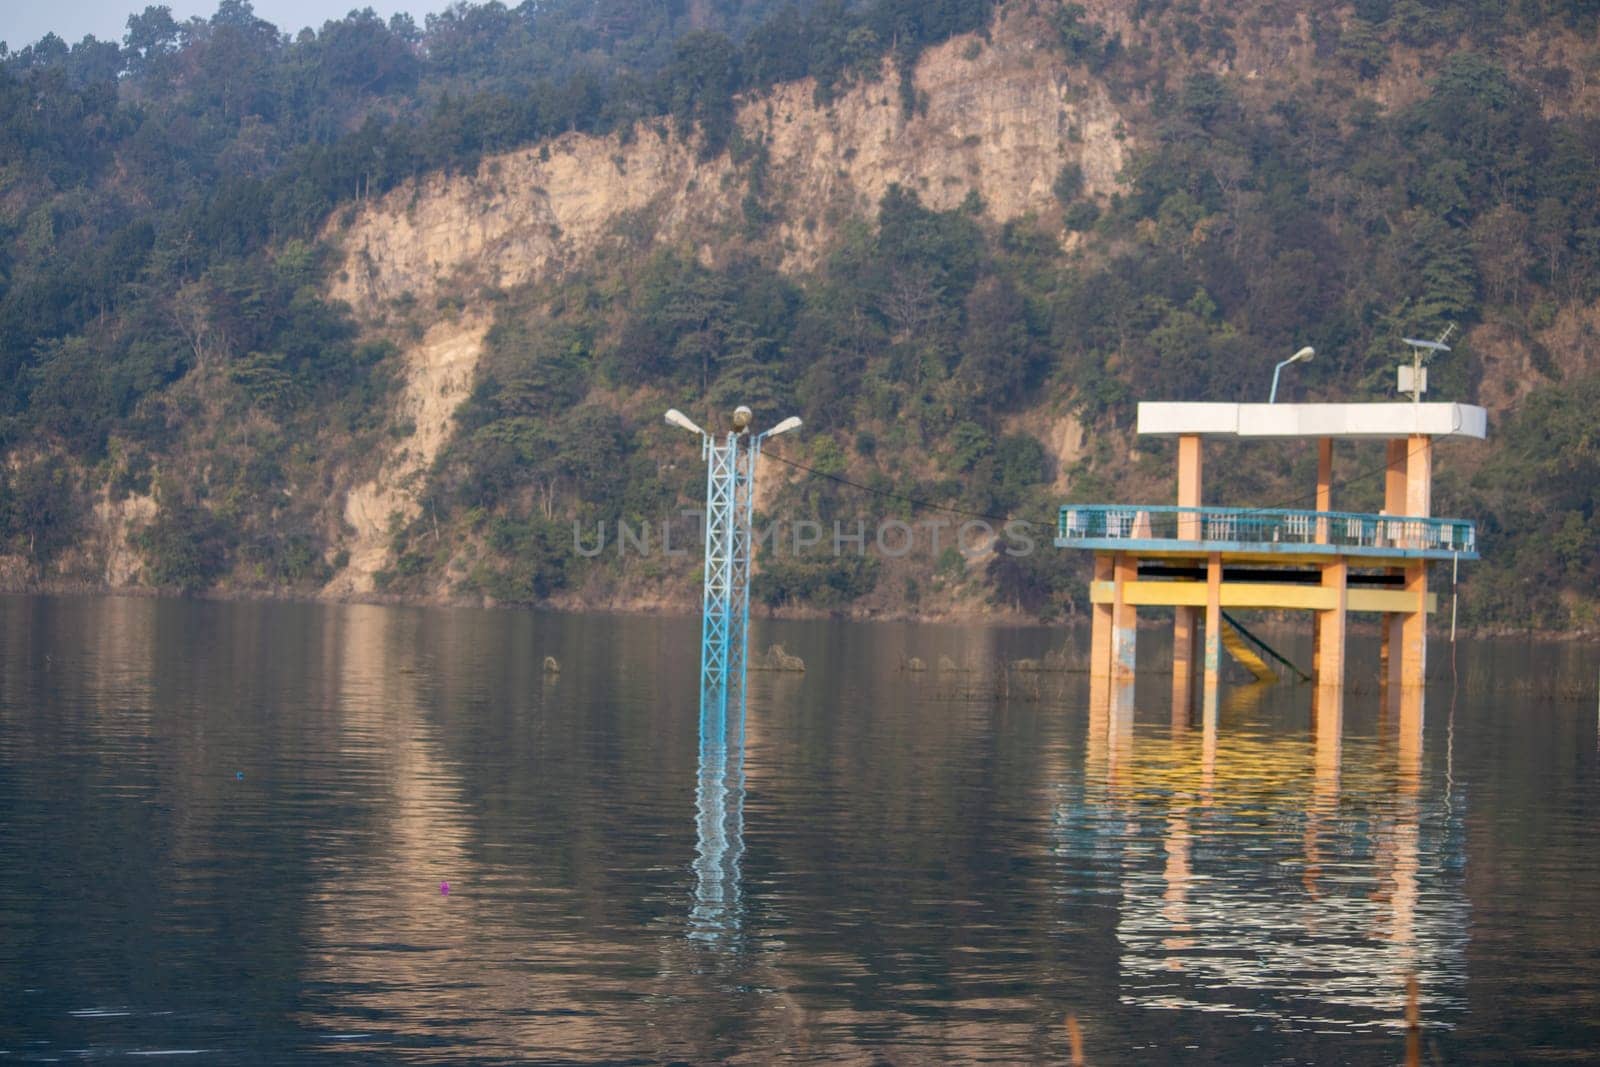 The Charming Small Landmark on Uttarakhand's Waterways by stocksvids